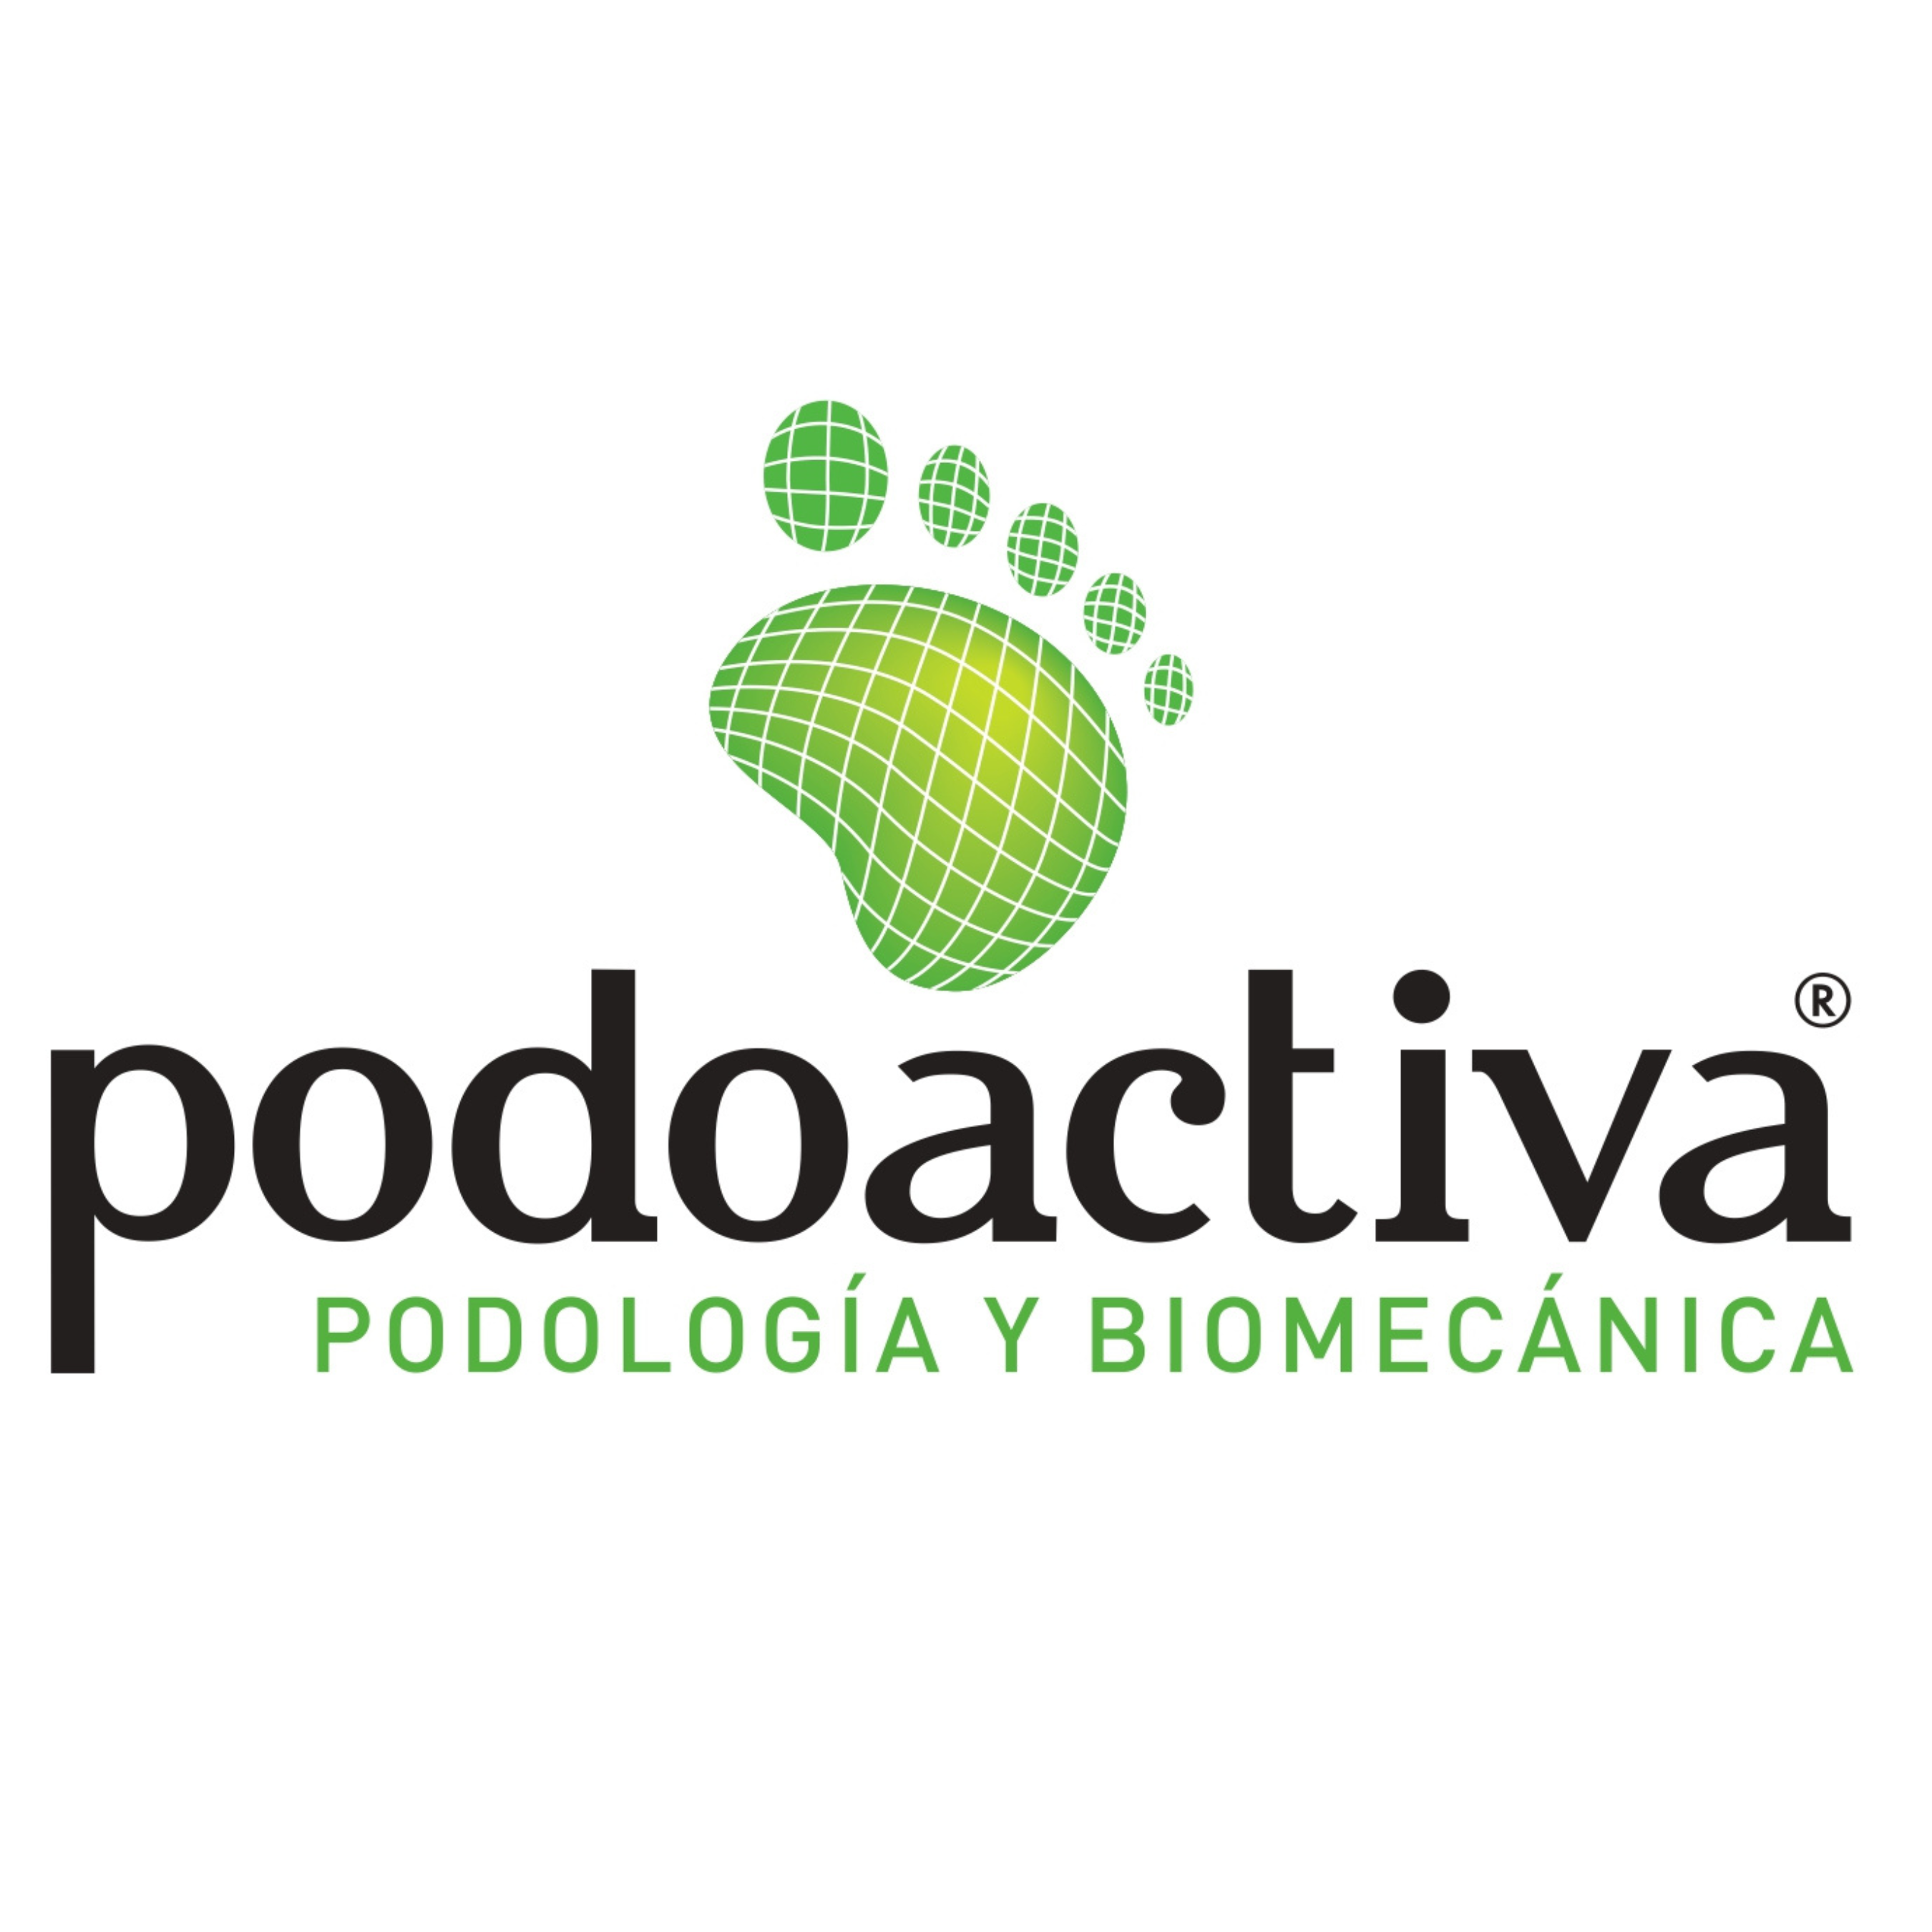 https://sdcompostela.com/wp-content/uploads/2022/11/Podoactiva.png